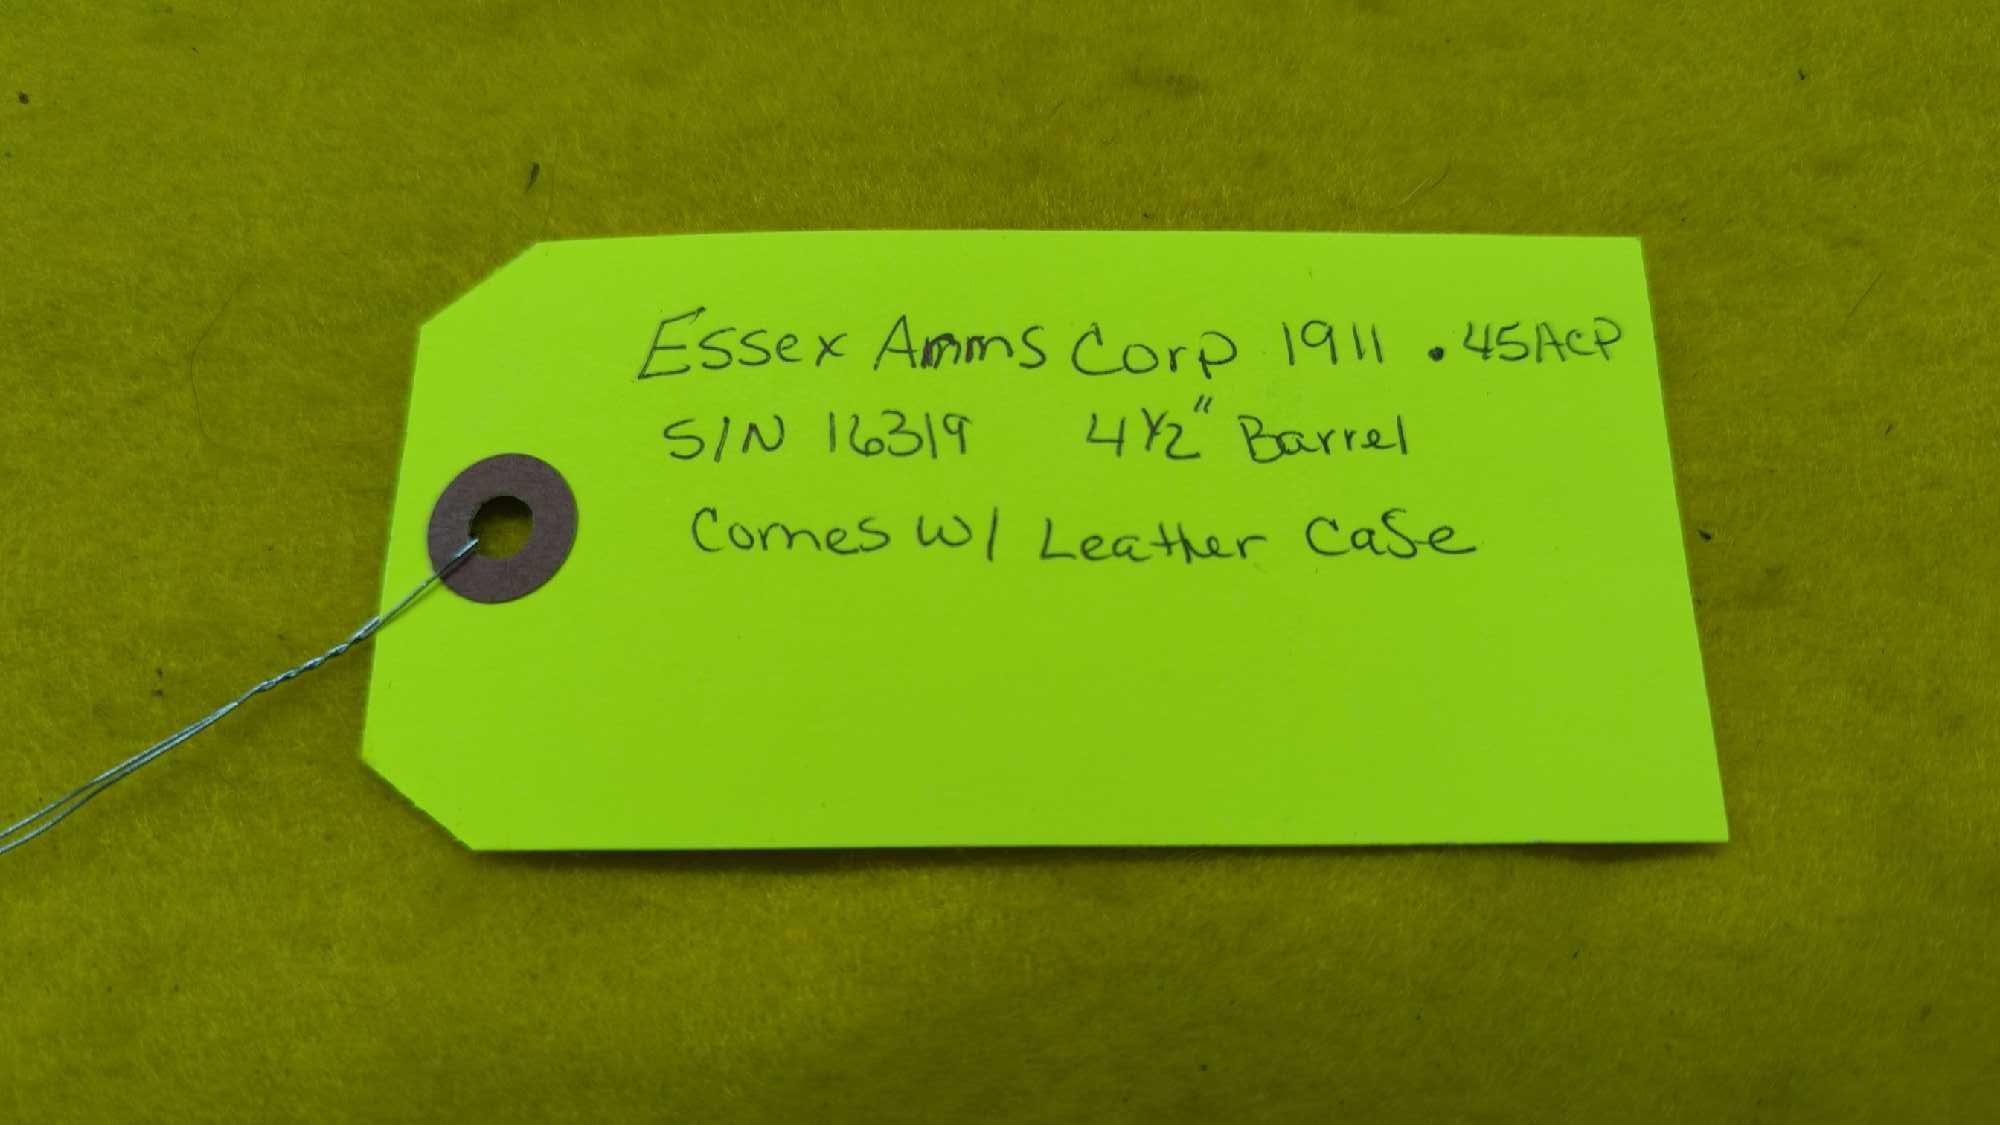 ESSEX ARMS 1911 .45ACP PISTOL SN 16319 4.5" BARREL INCLUDES LEATHER CASE